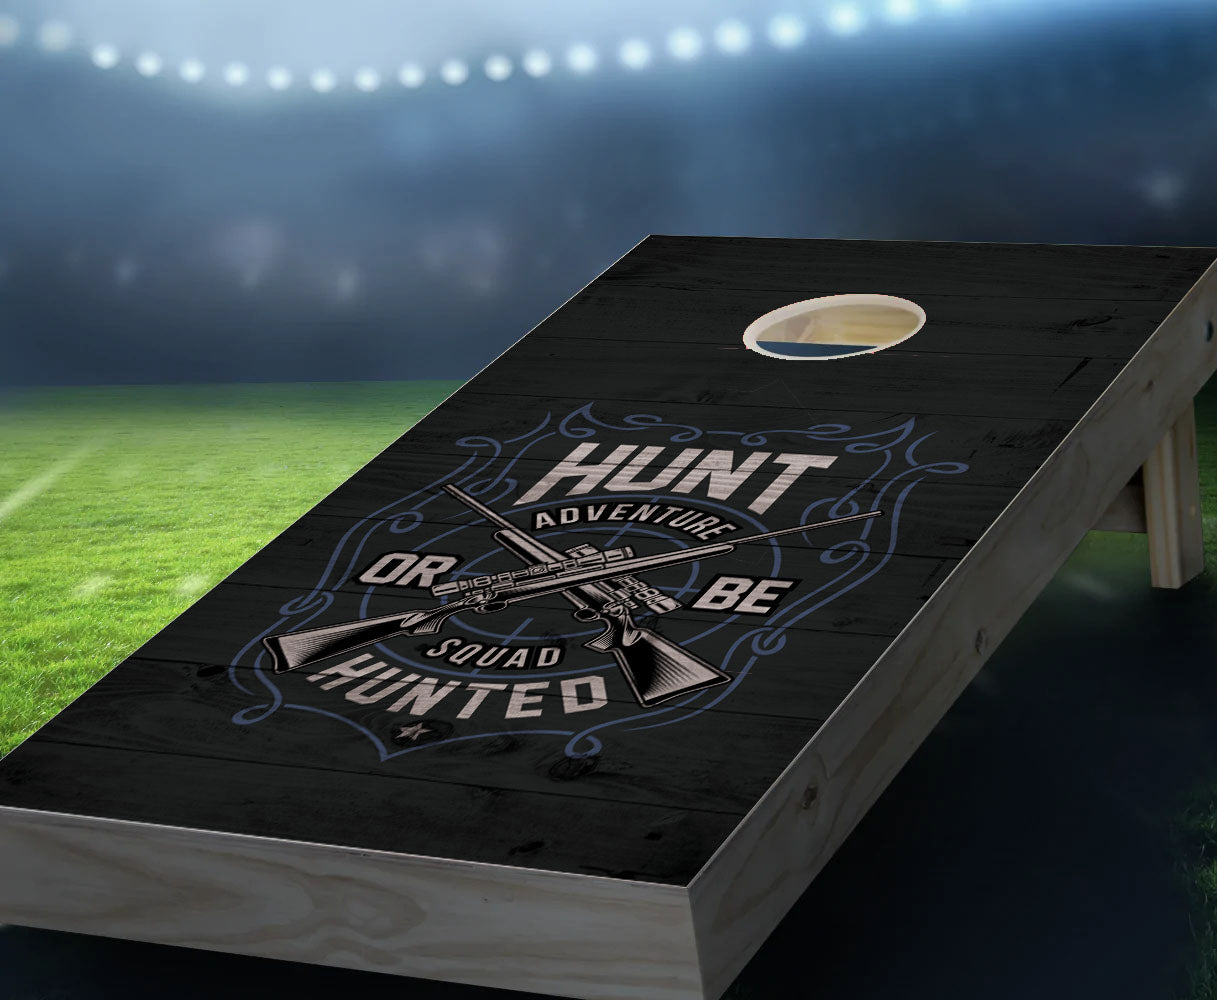 "Hunt Or Be Hunted" Cornhole Boards